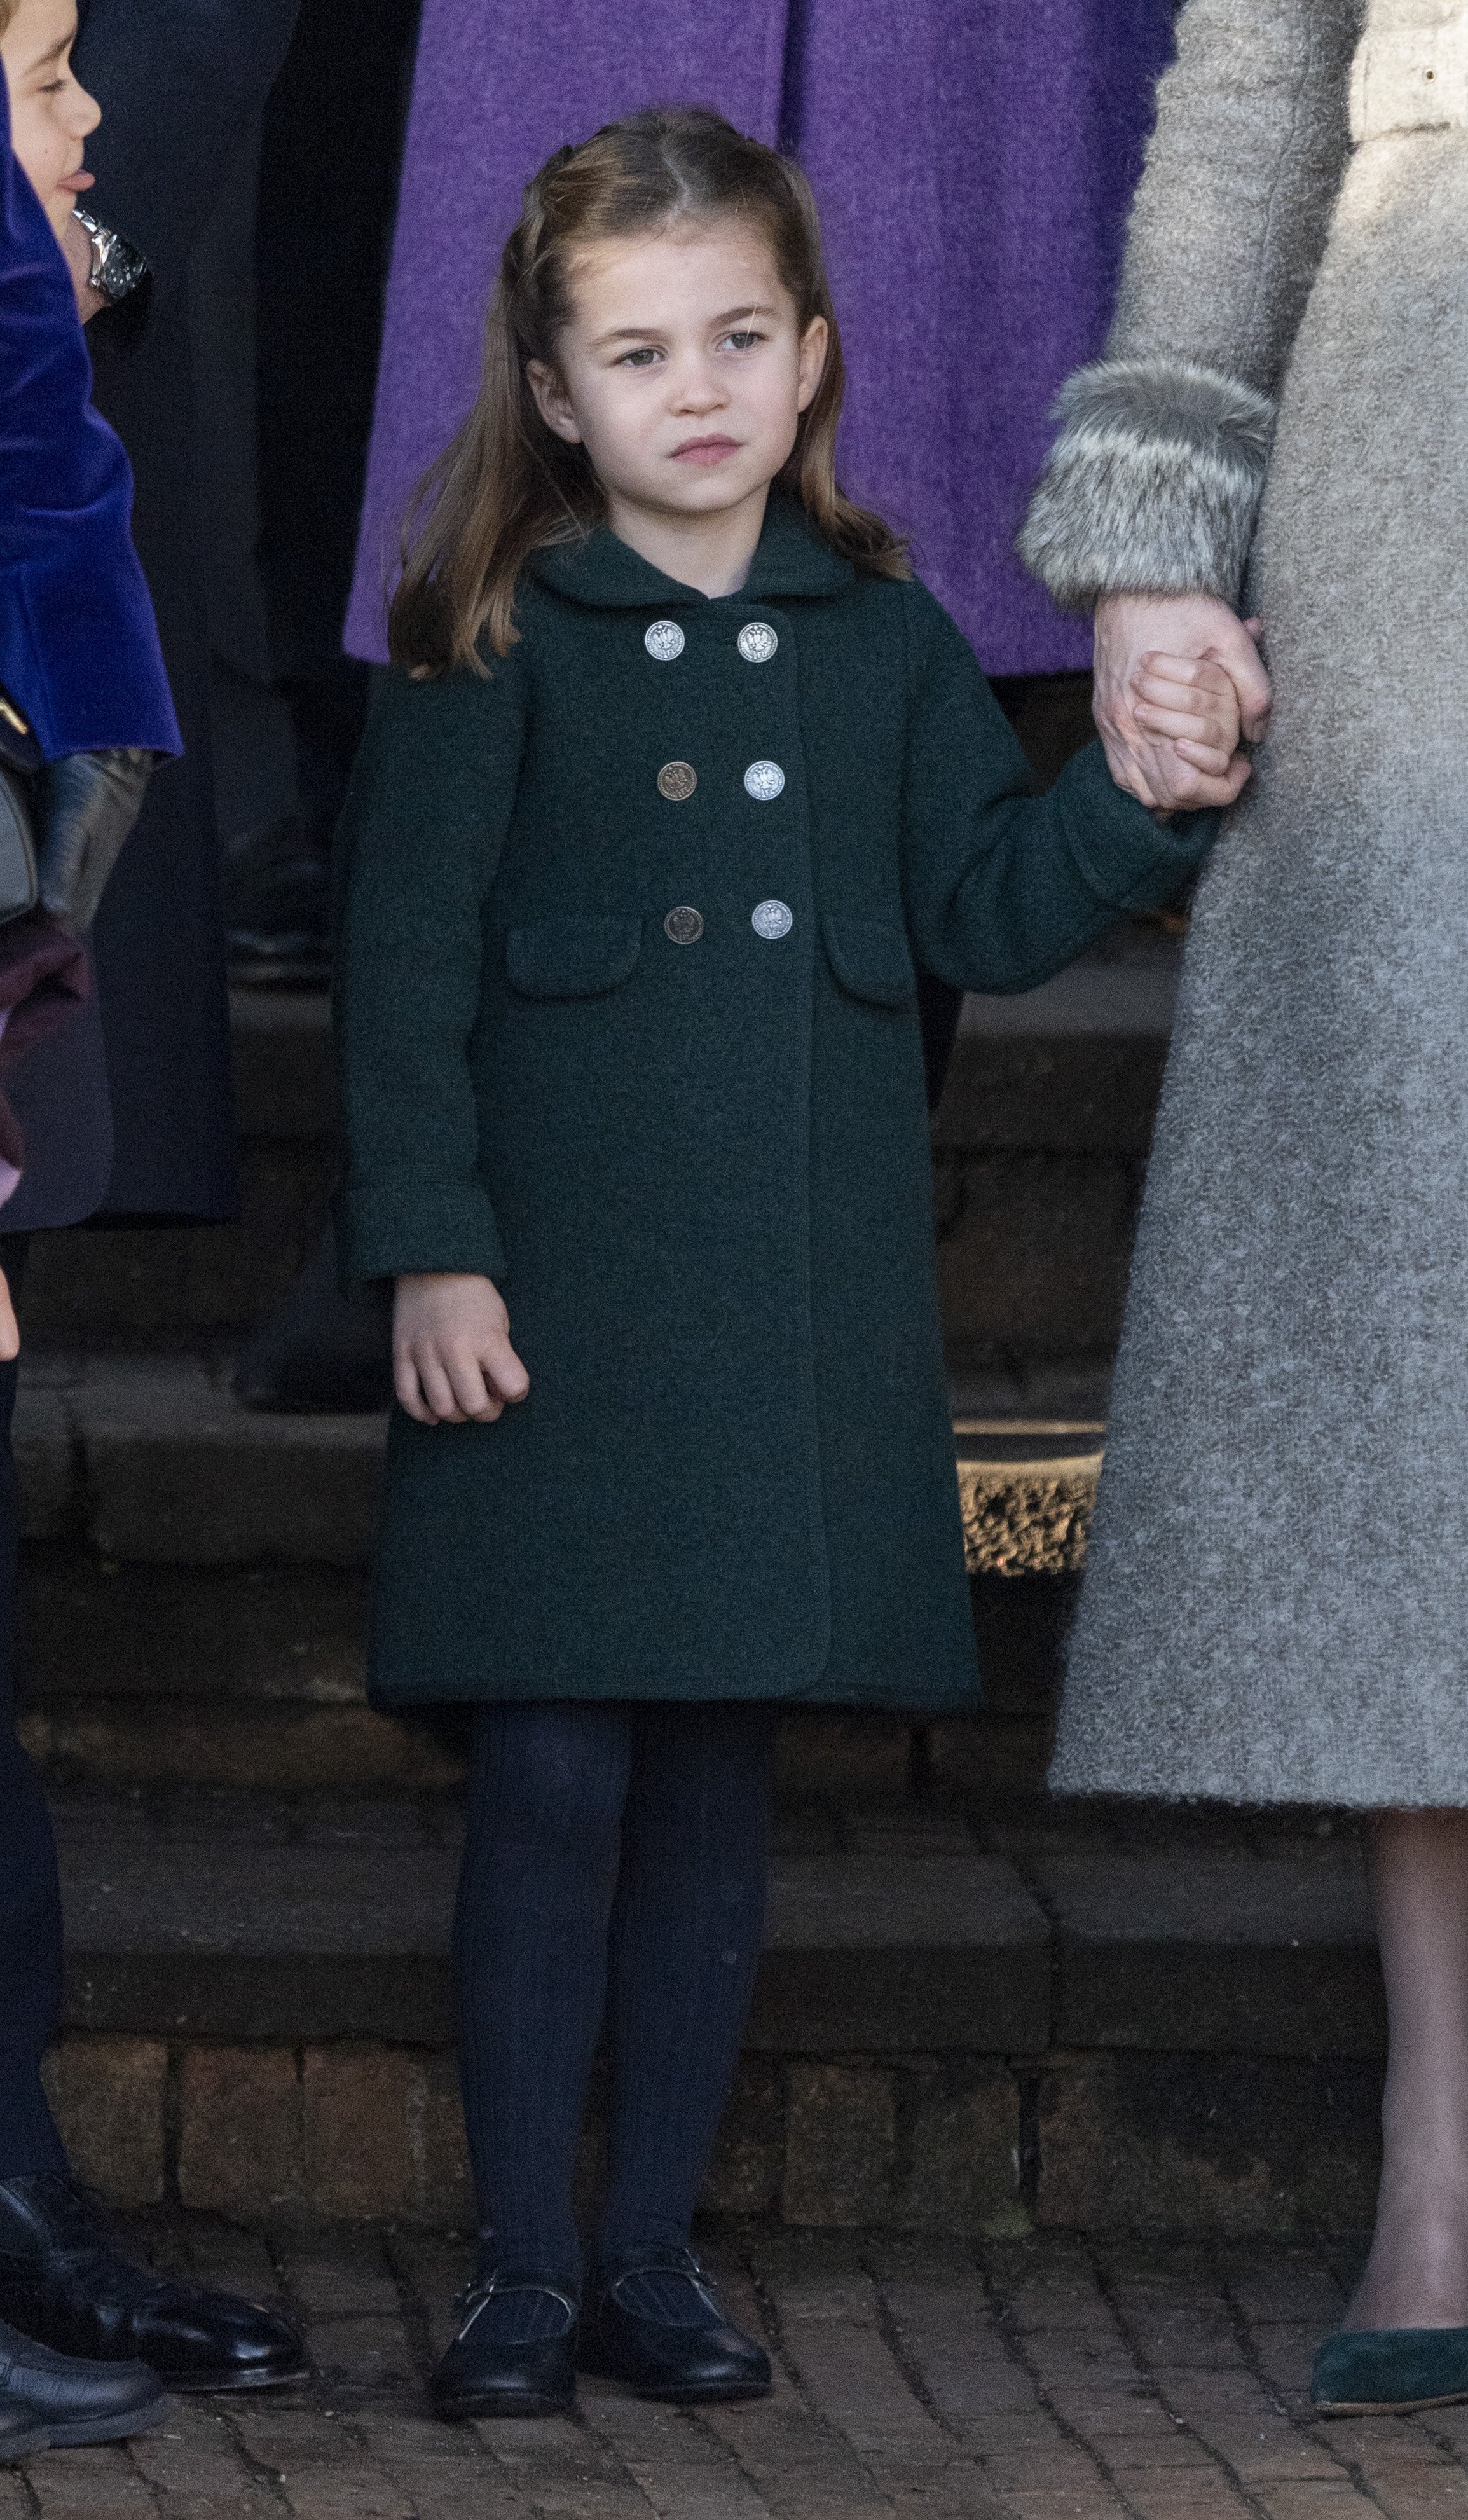 Princesa Charlotte en King's Lynn, Inglaterra en diciembre de 2019. | Foto: Getty Images